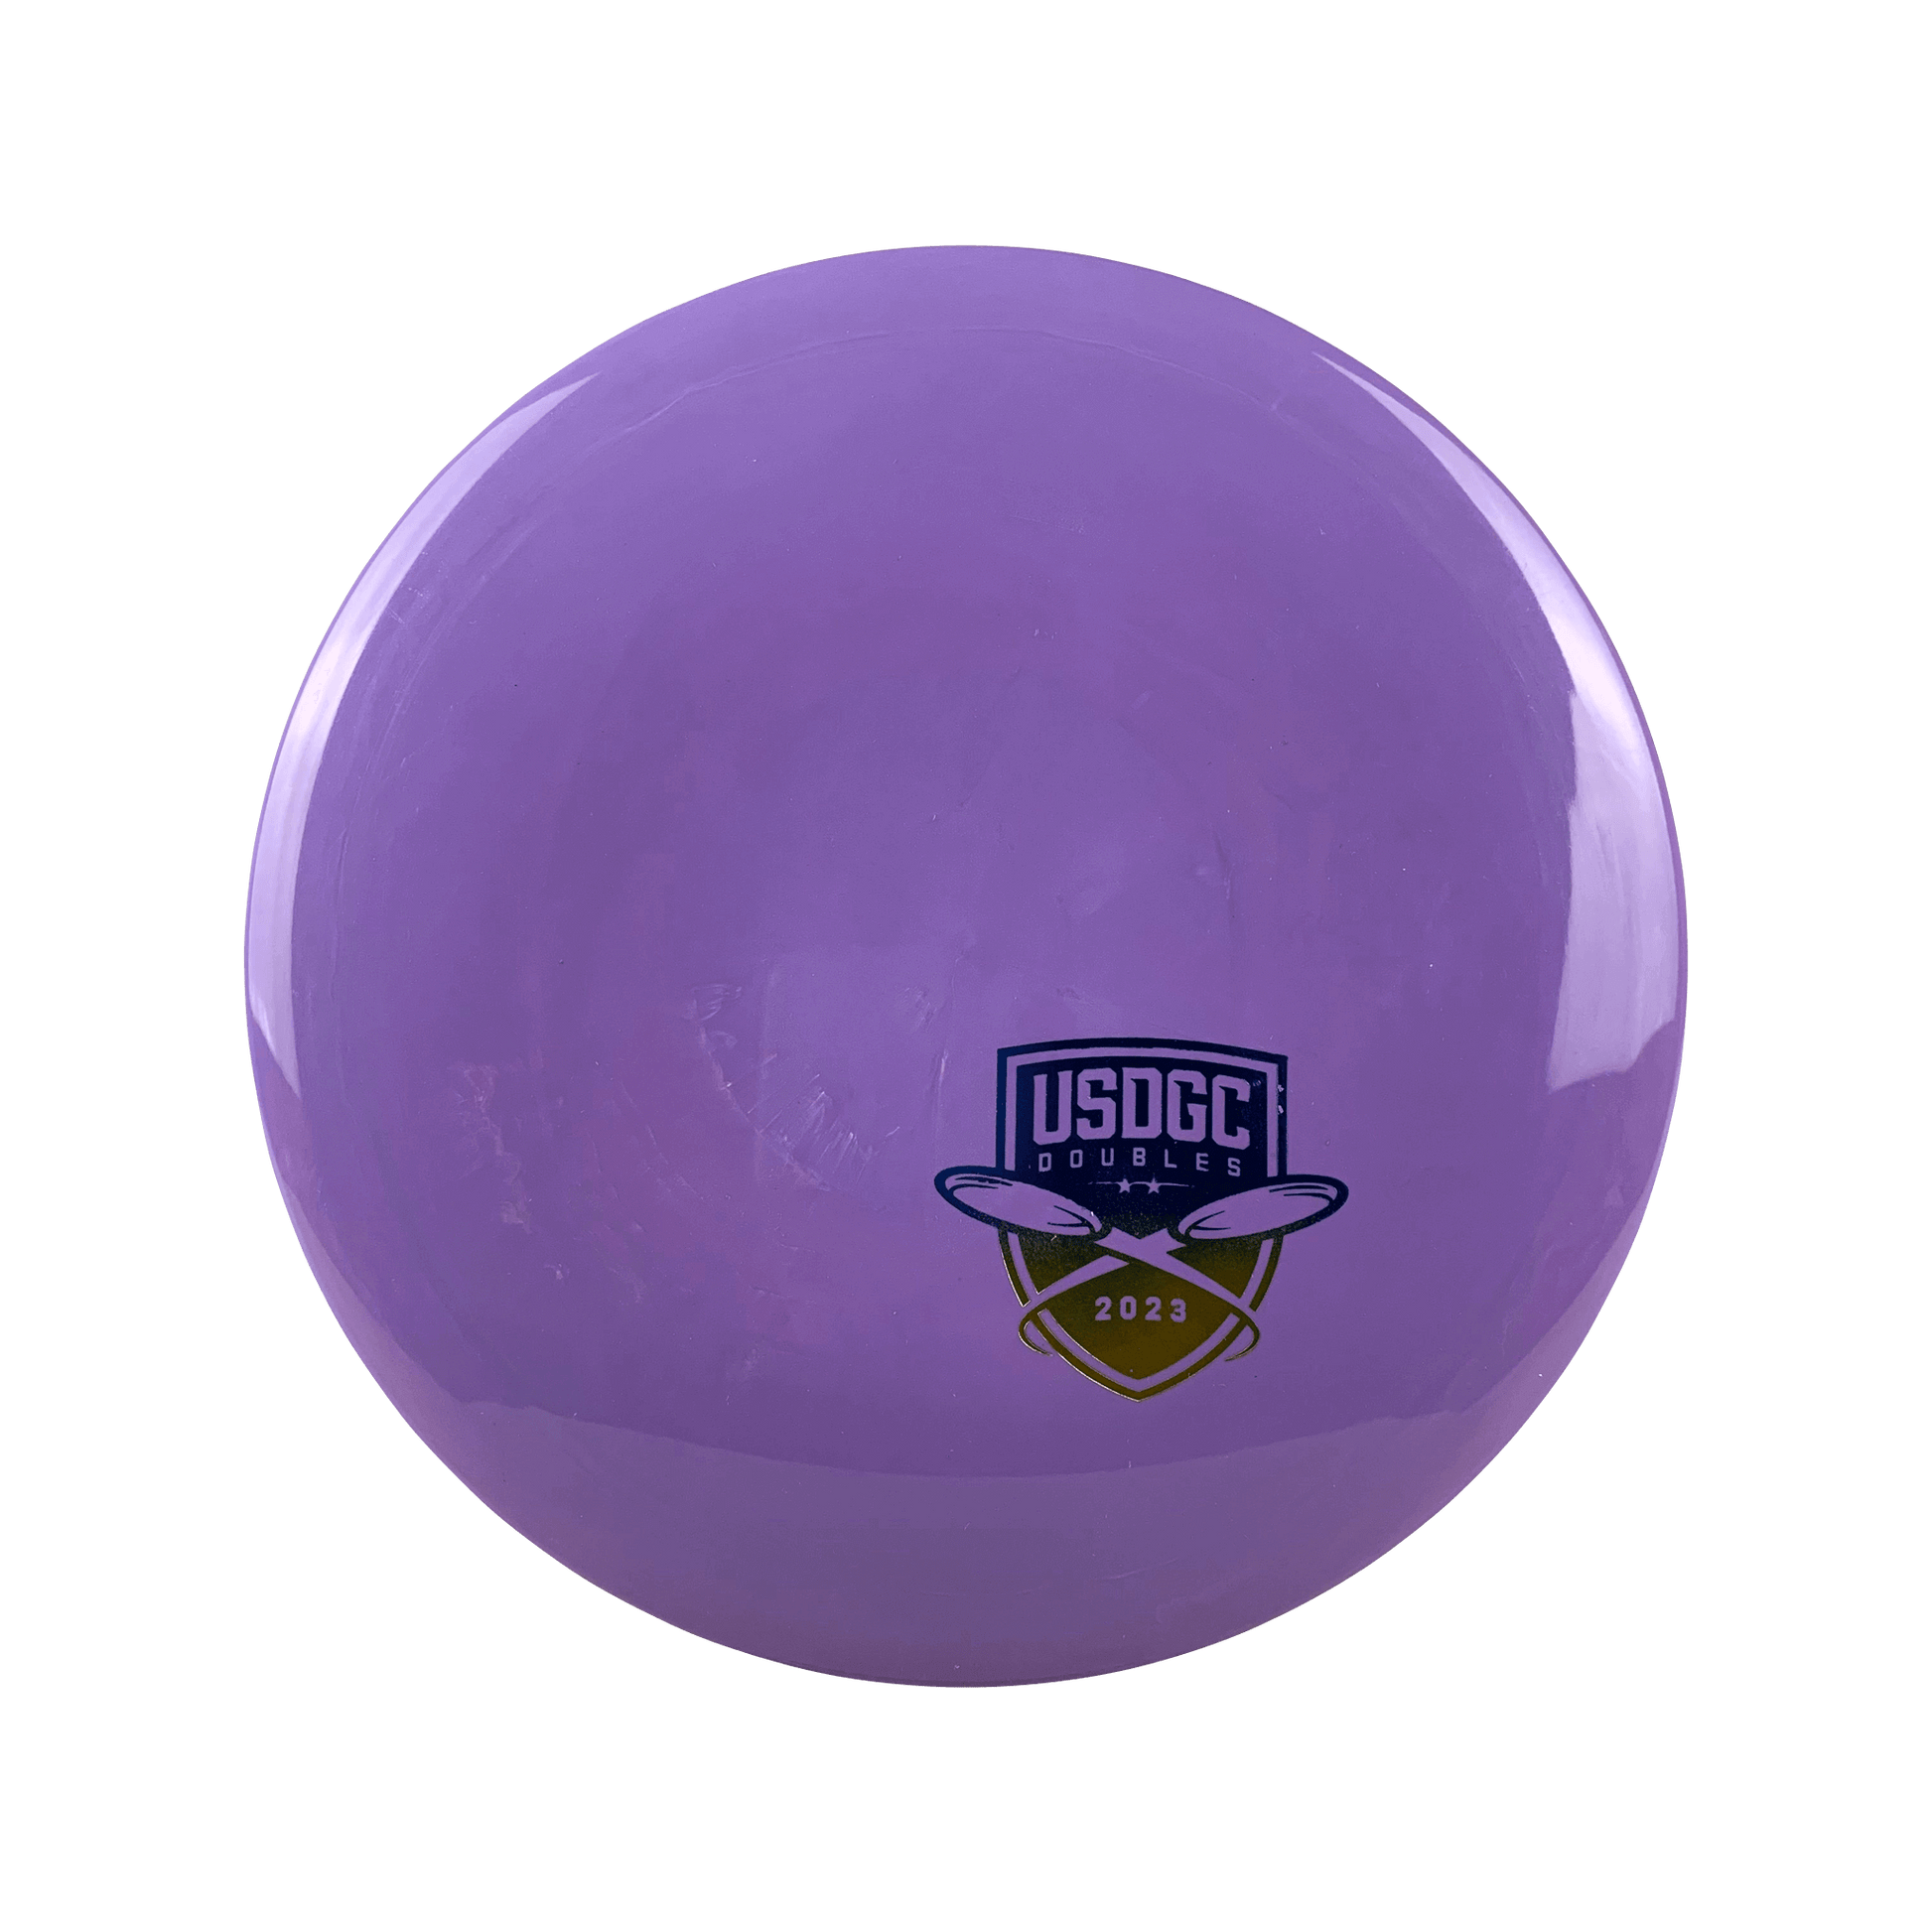 Star TL - USDGC Doubles Disc Innova purple 163 